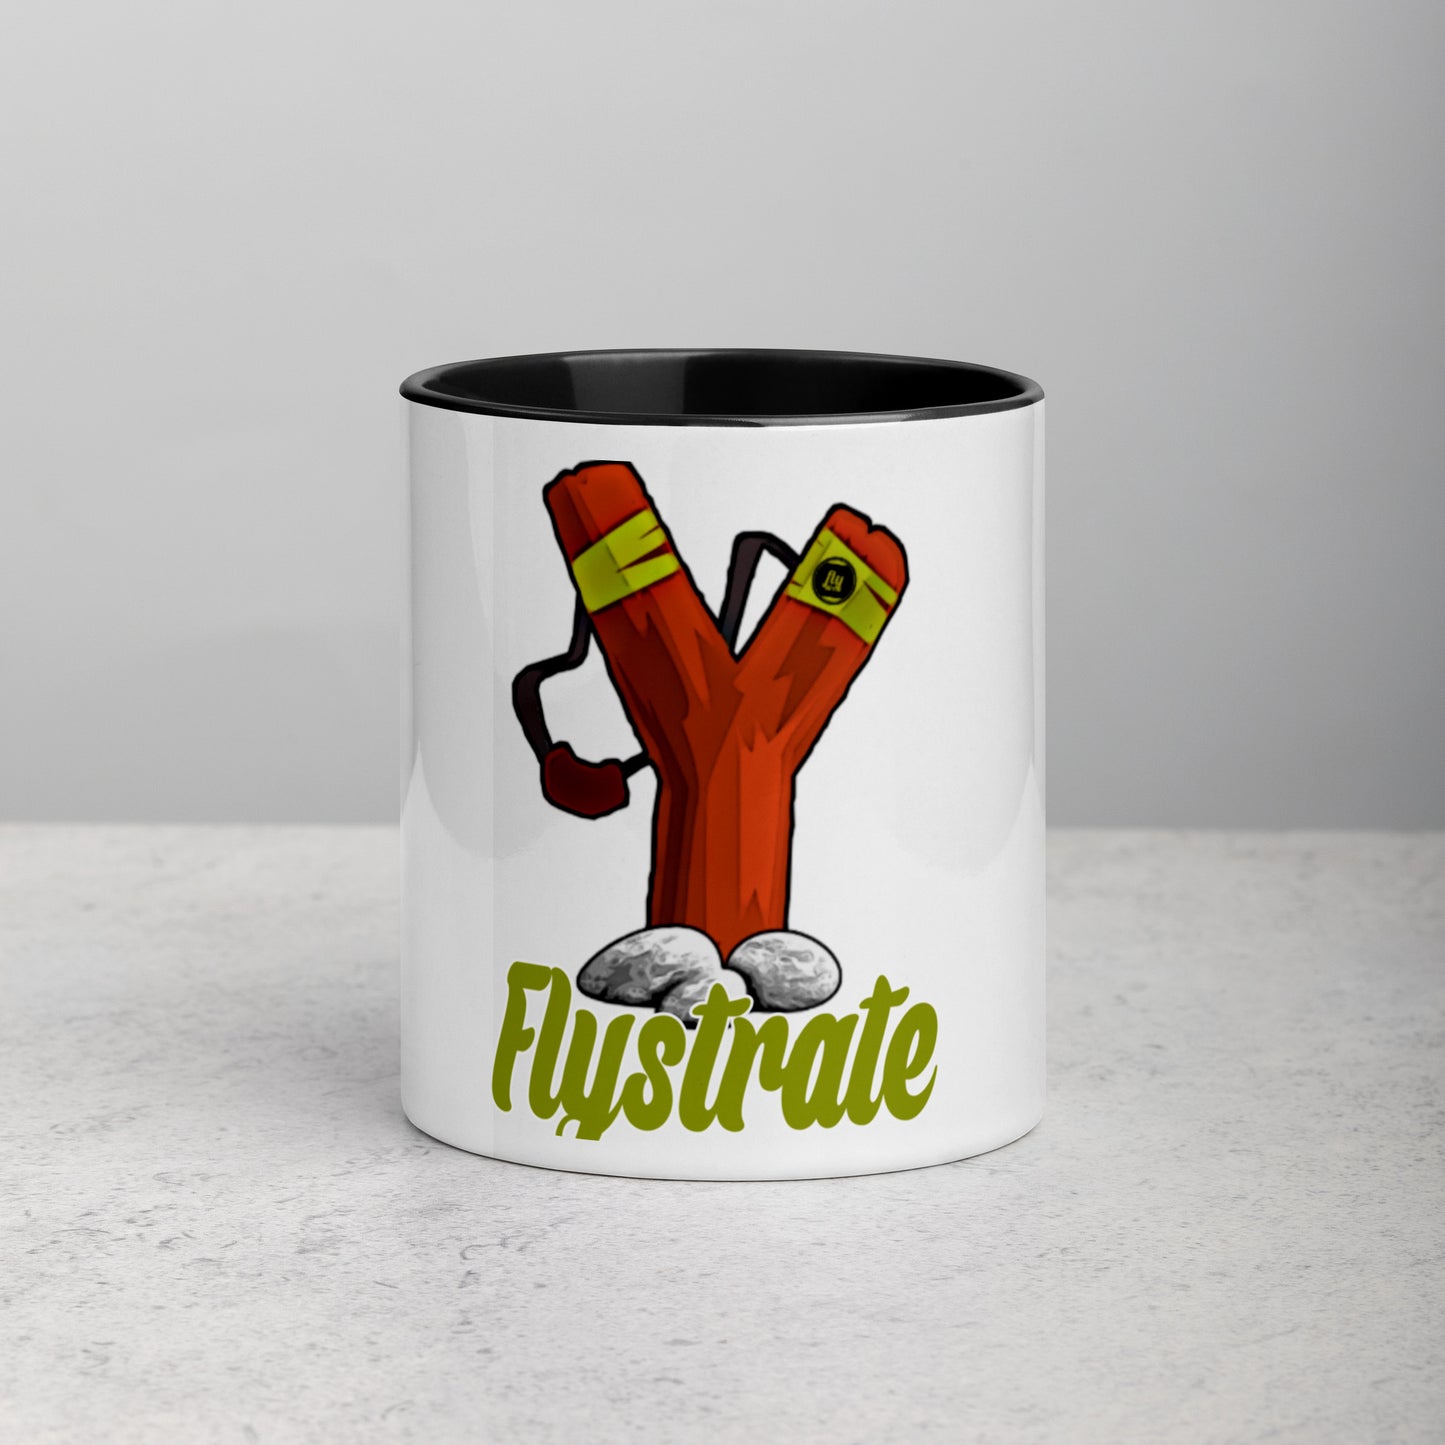 Flystrate Coffee Mug